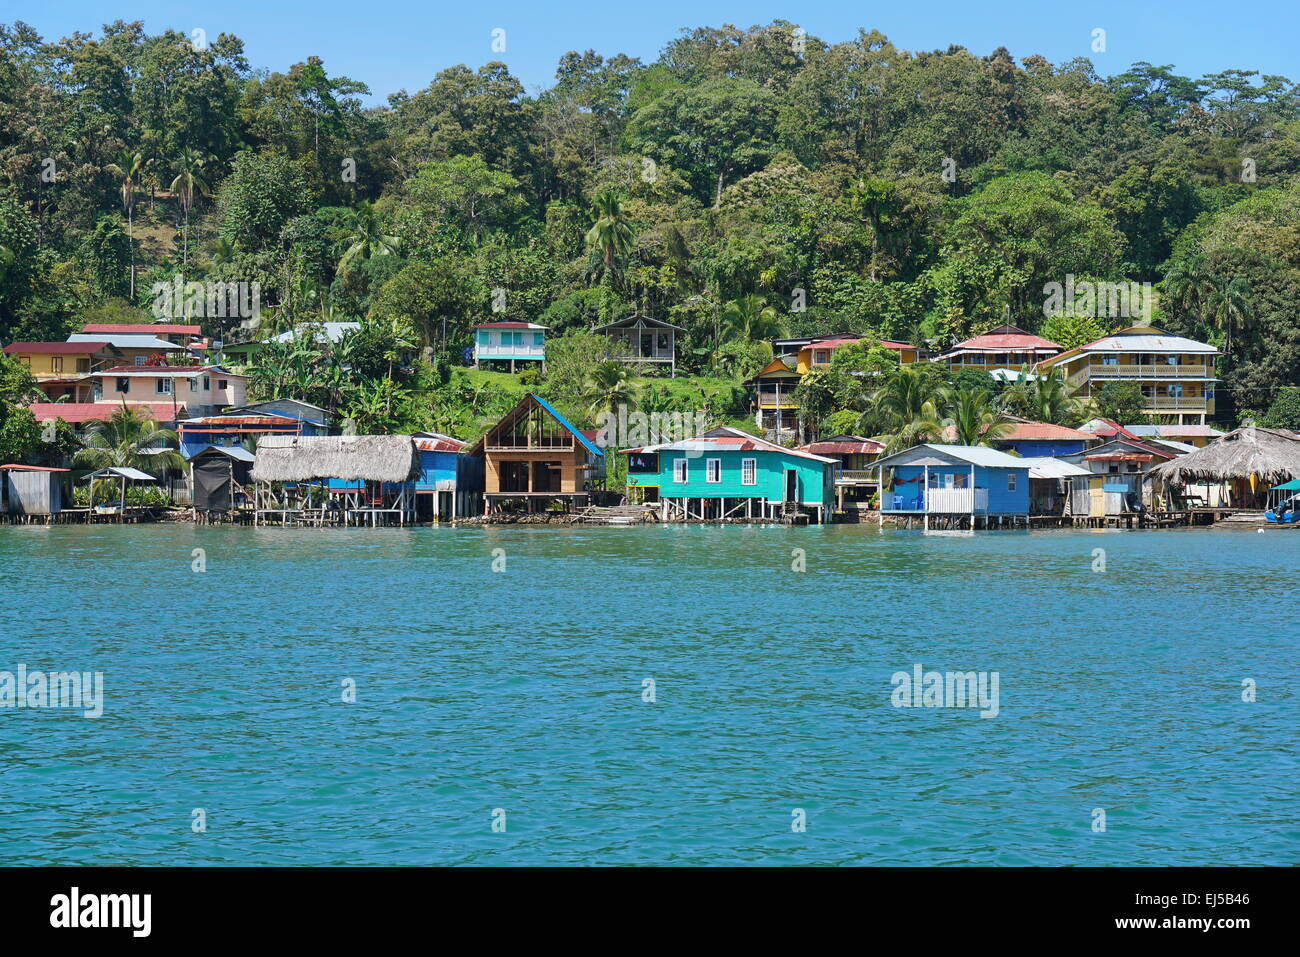 Coastal village of Old Bank with Caribbean houses and lush tropical vegetation, Bastimentos island, Bocas del Toro, Panama Stock Photo